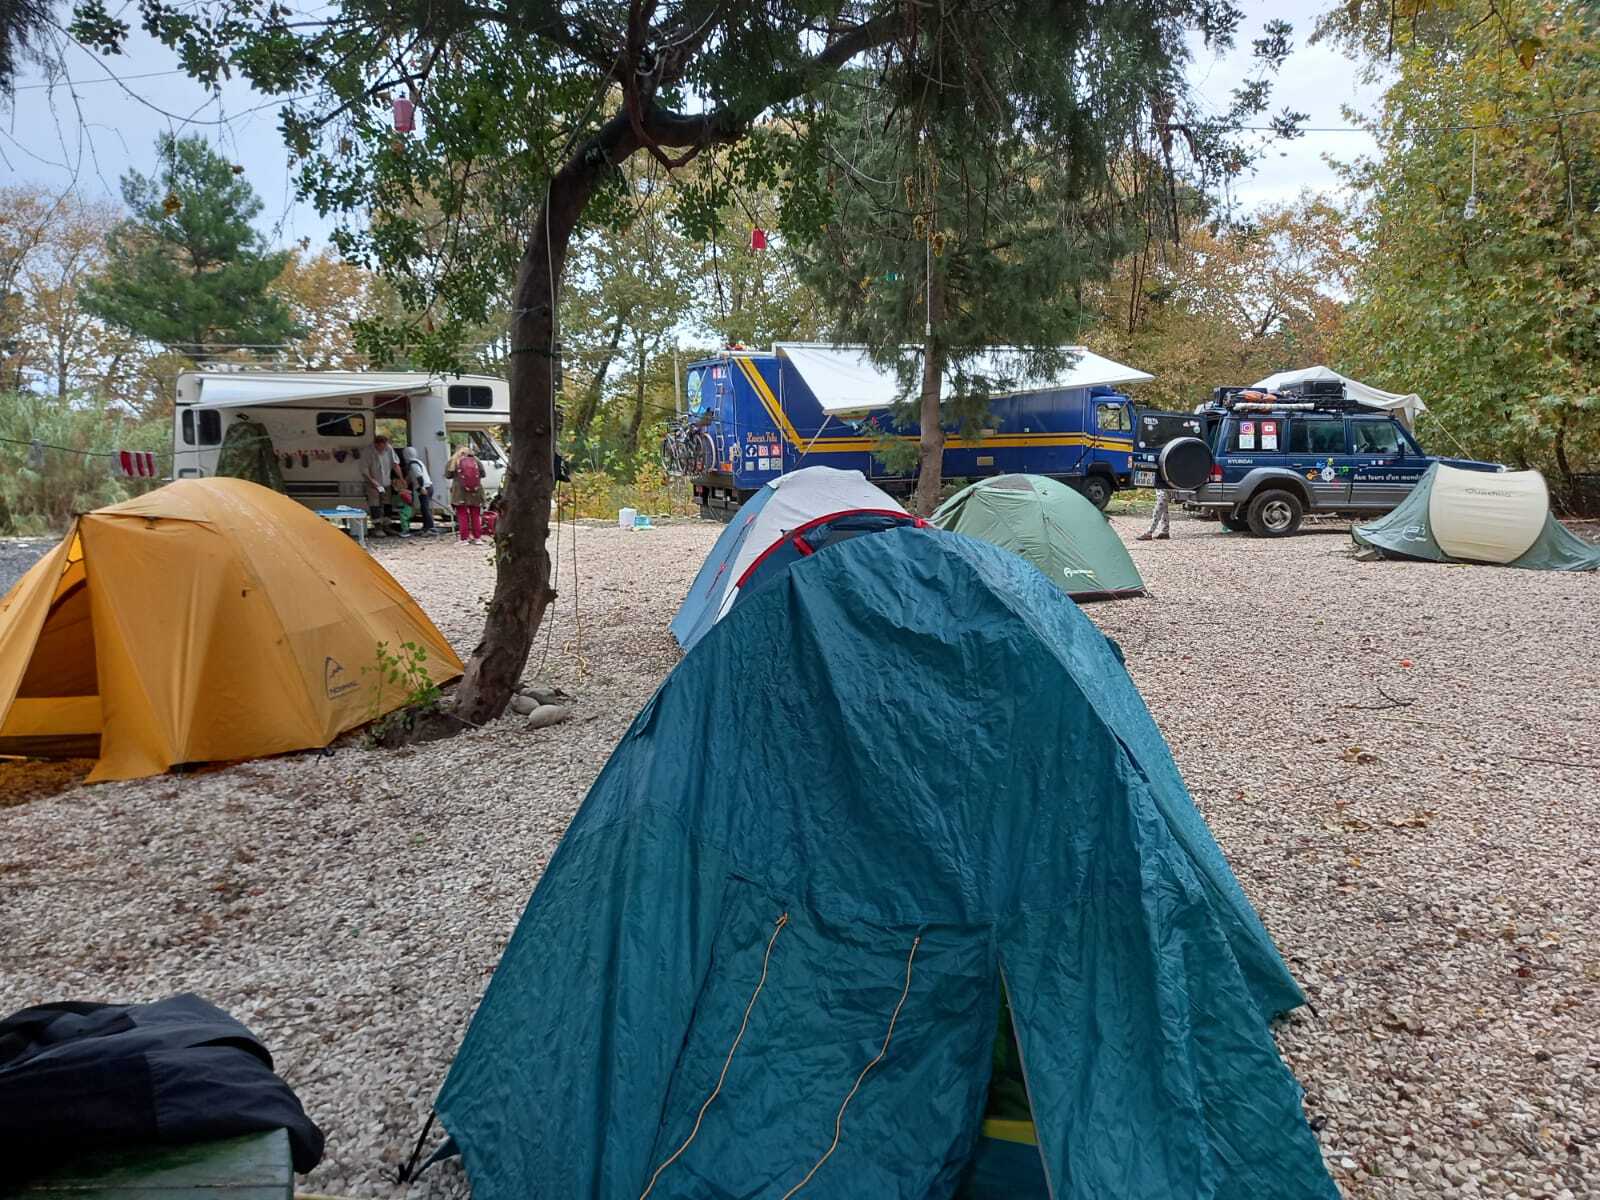 Çadır Kamp